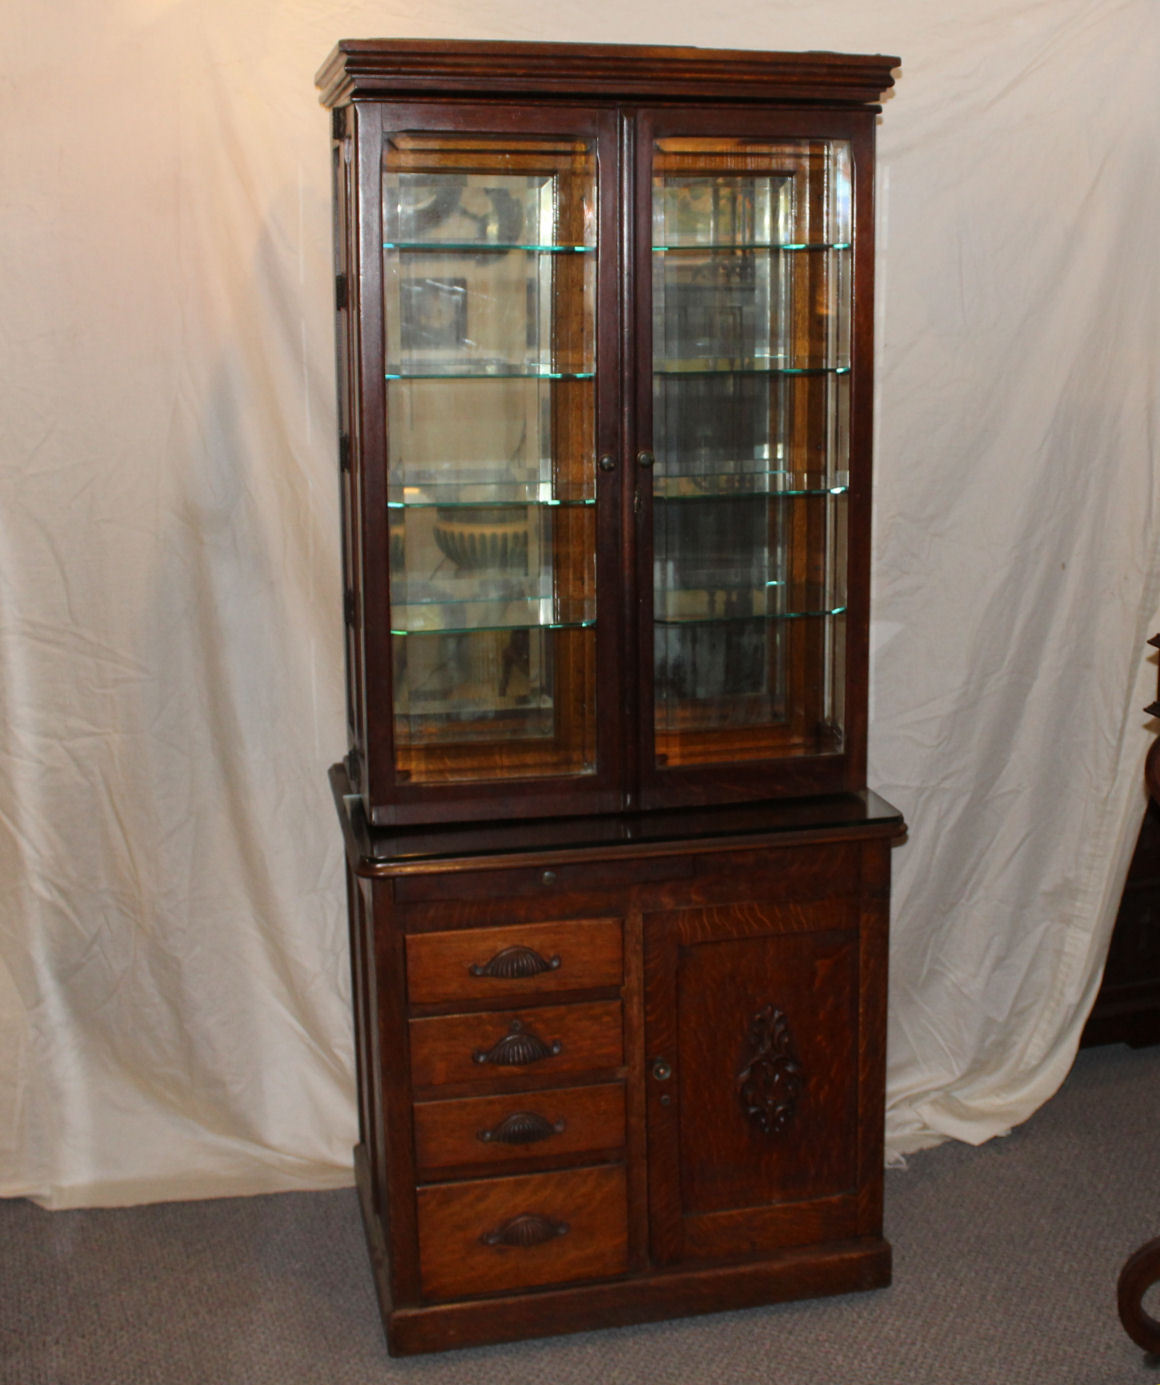 Rare Antique Oak Doctors Cabinet – W.D. Allison Co. - Display and Storage Cabine